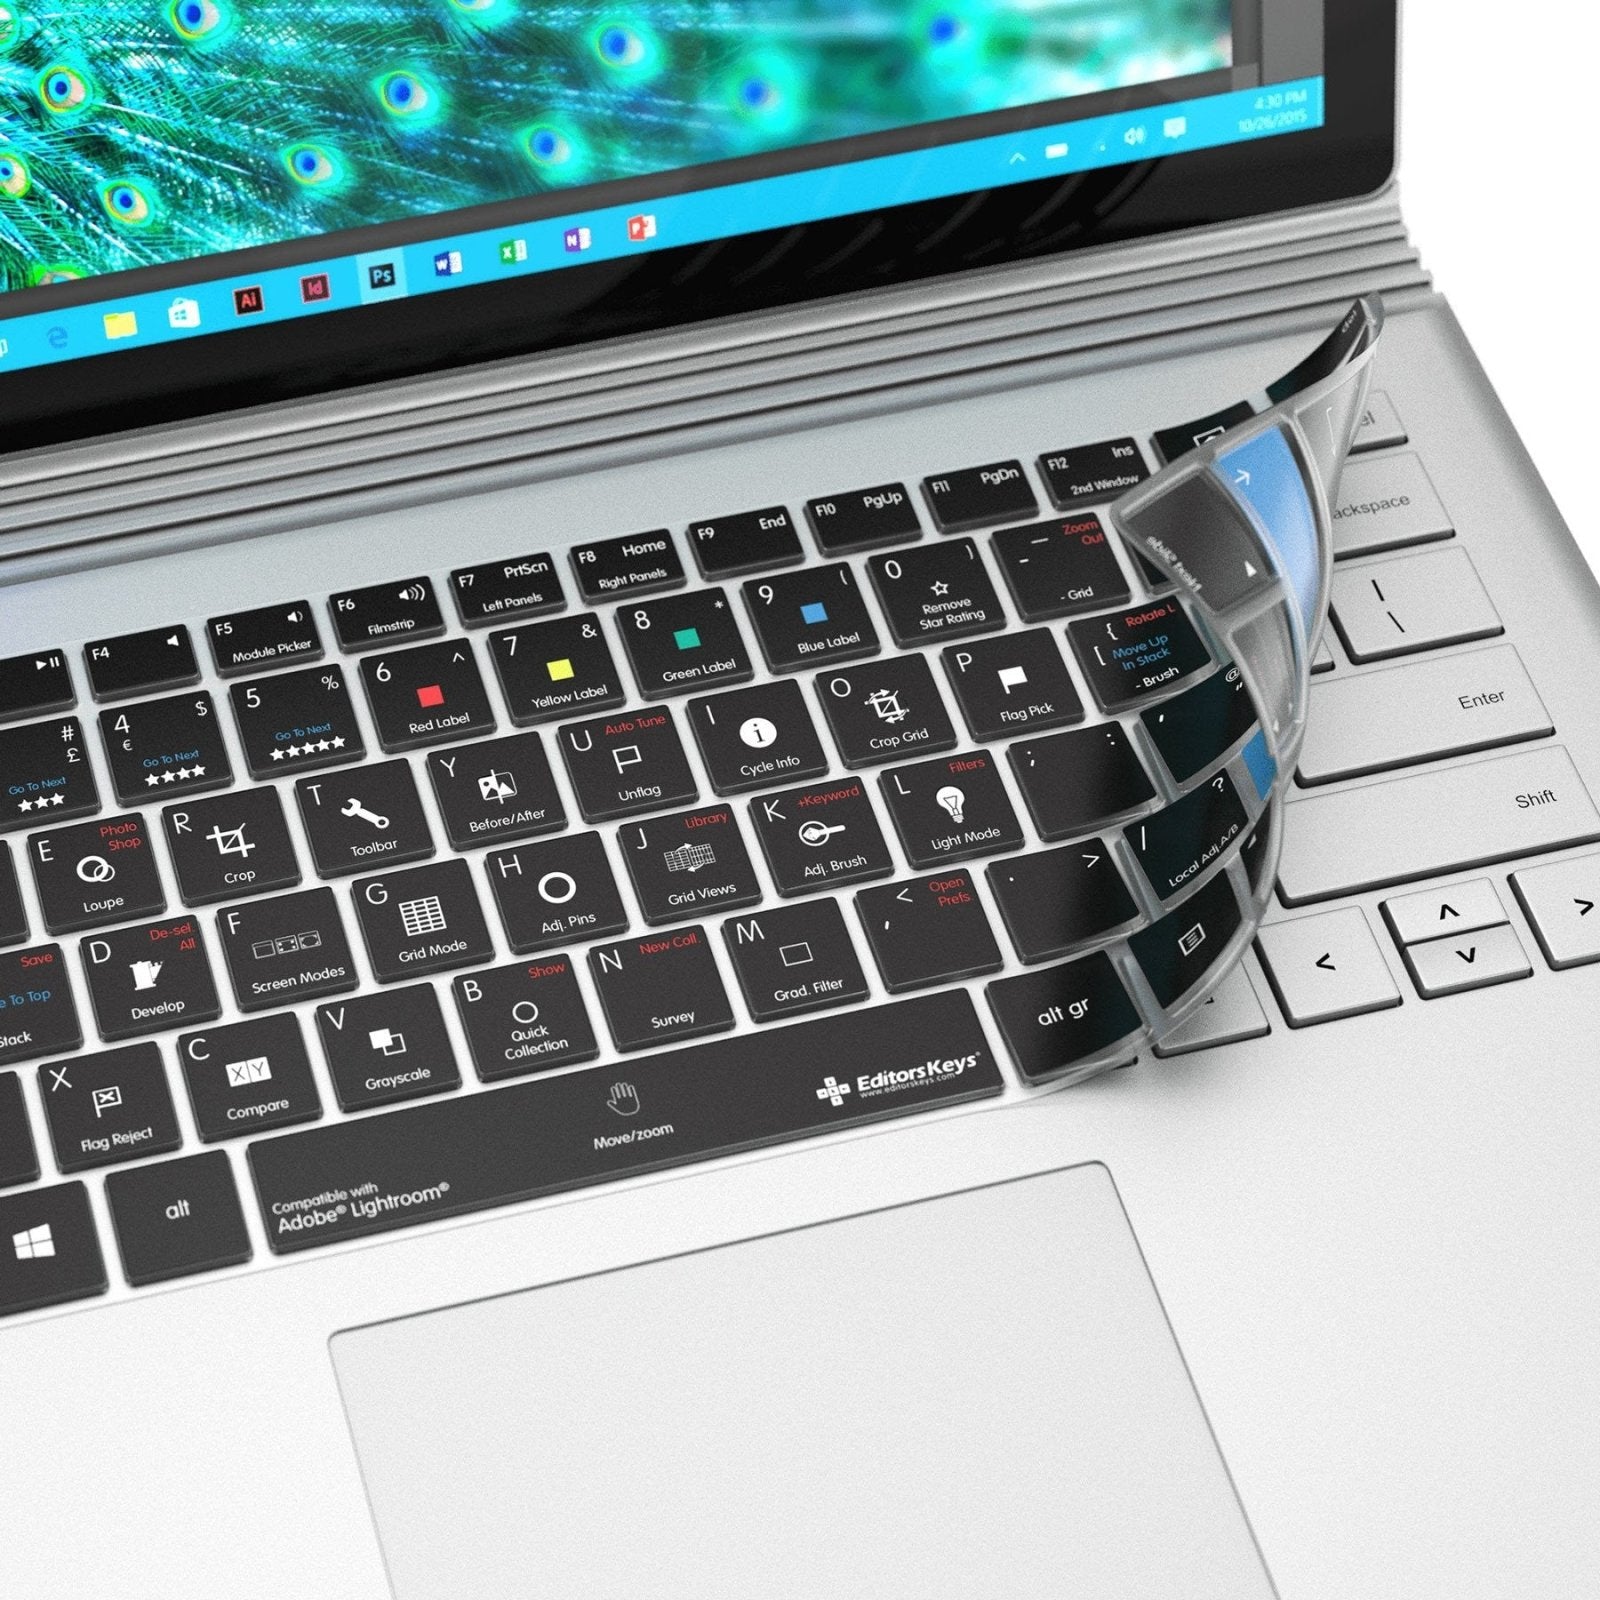 Adobe Lightroom Keyboard Covers for Microsoft Surface Line - Editors Keys